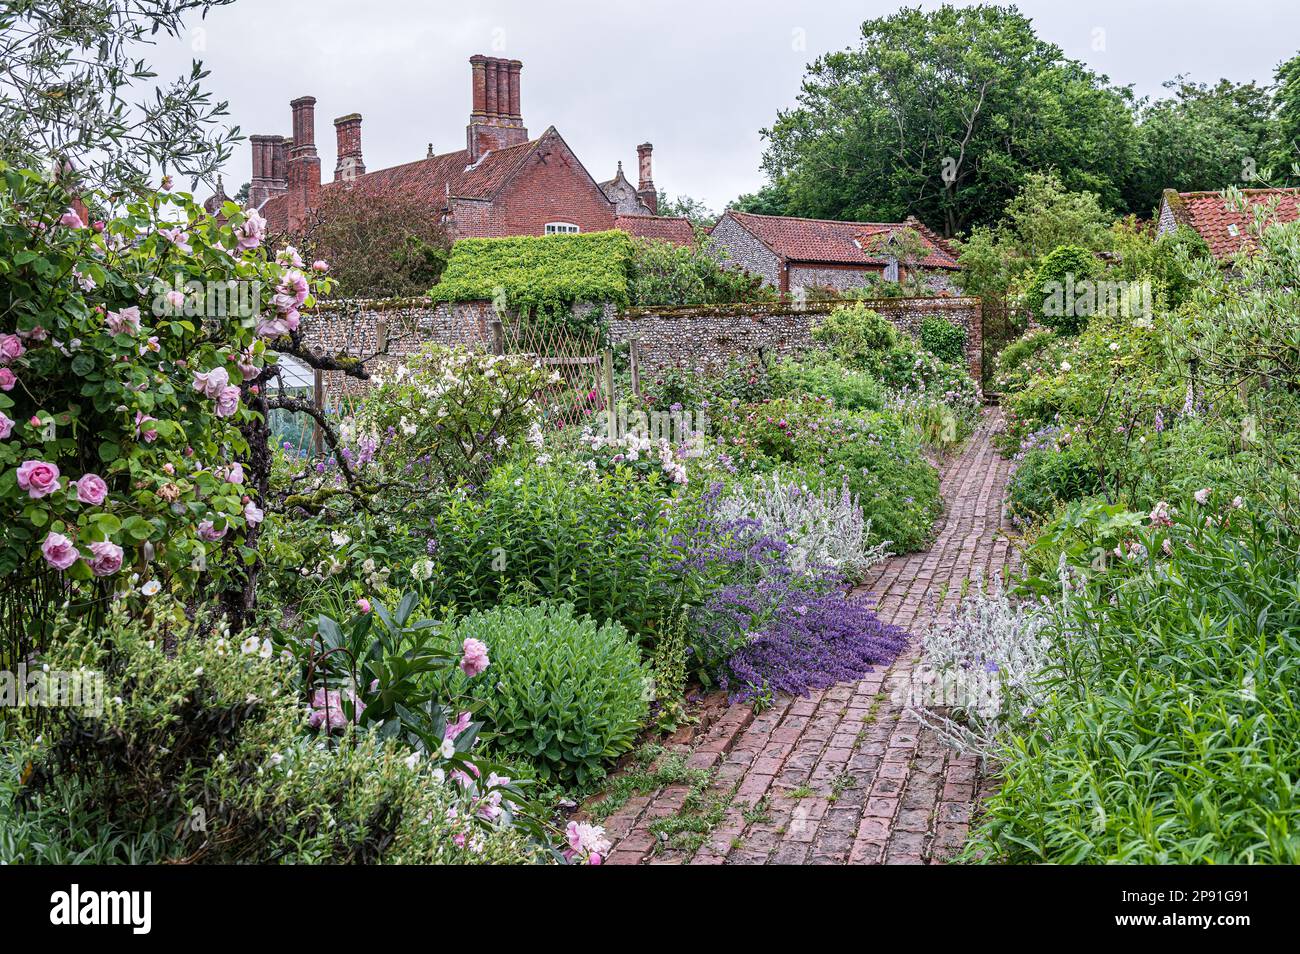 Kitchen garden at Wiveton Hall 17th century Jacobean manor house, Norfolk, UK Stock Photo